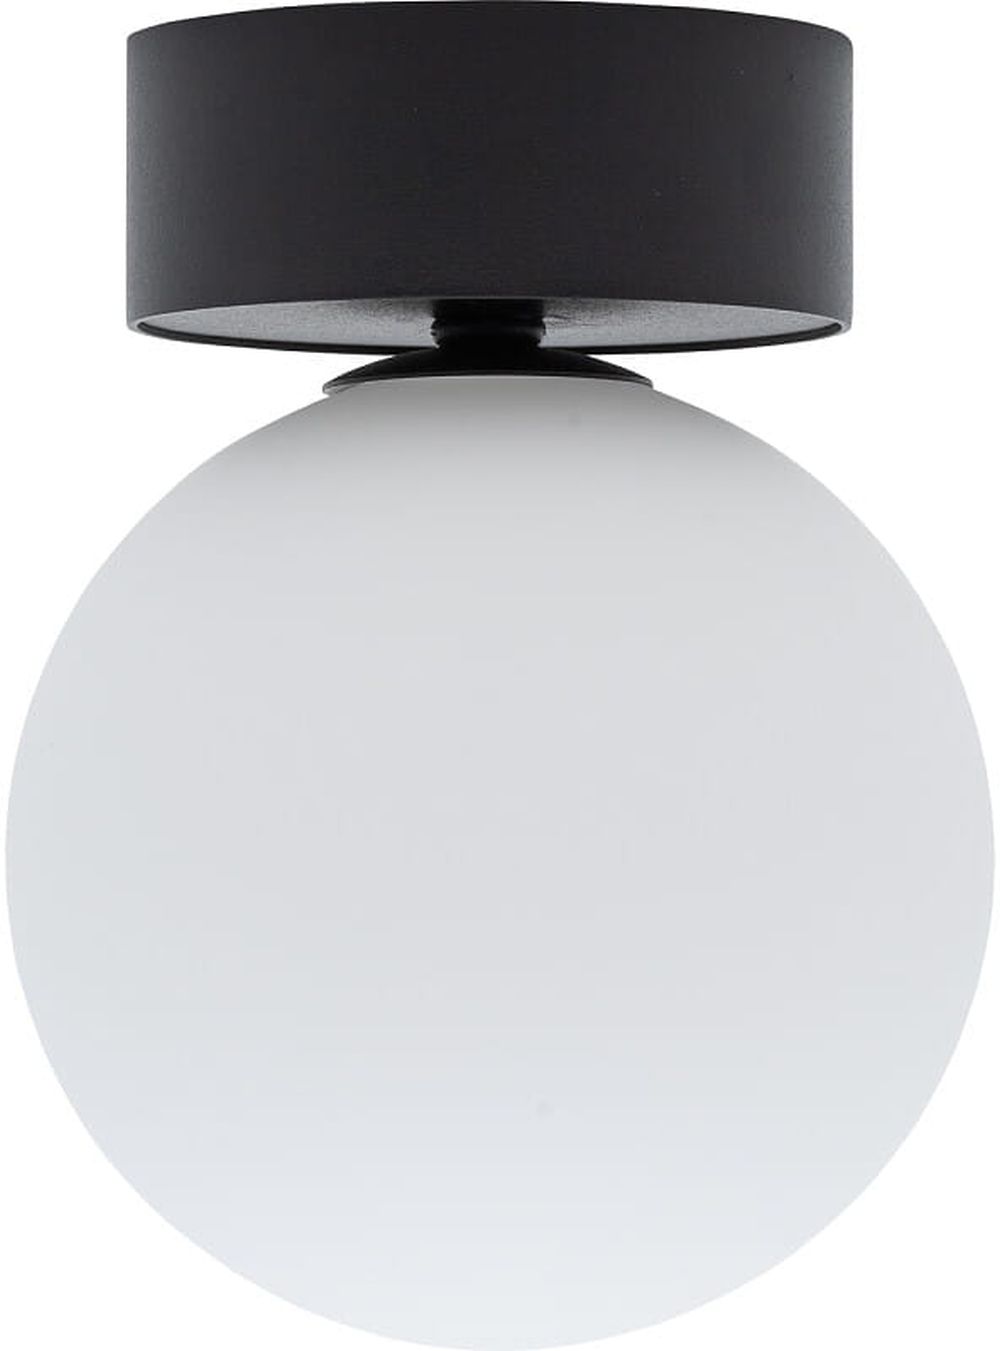 Nowodvorski Lighting Kier S závěsné svítidlo 1x12 W bílá-černá 10302